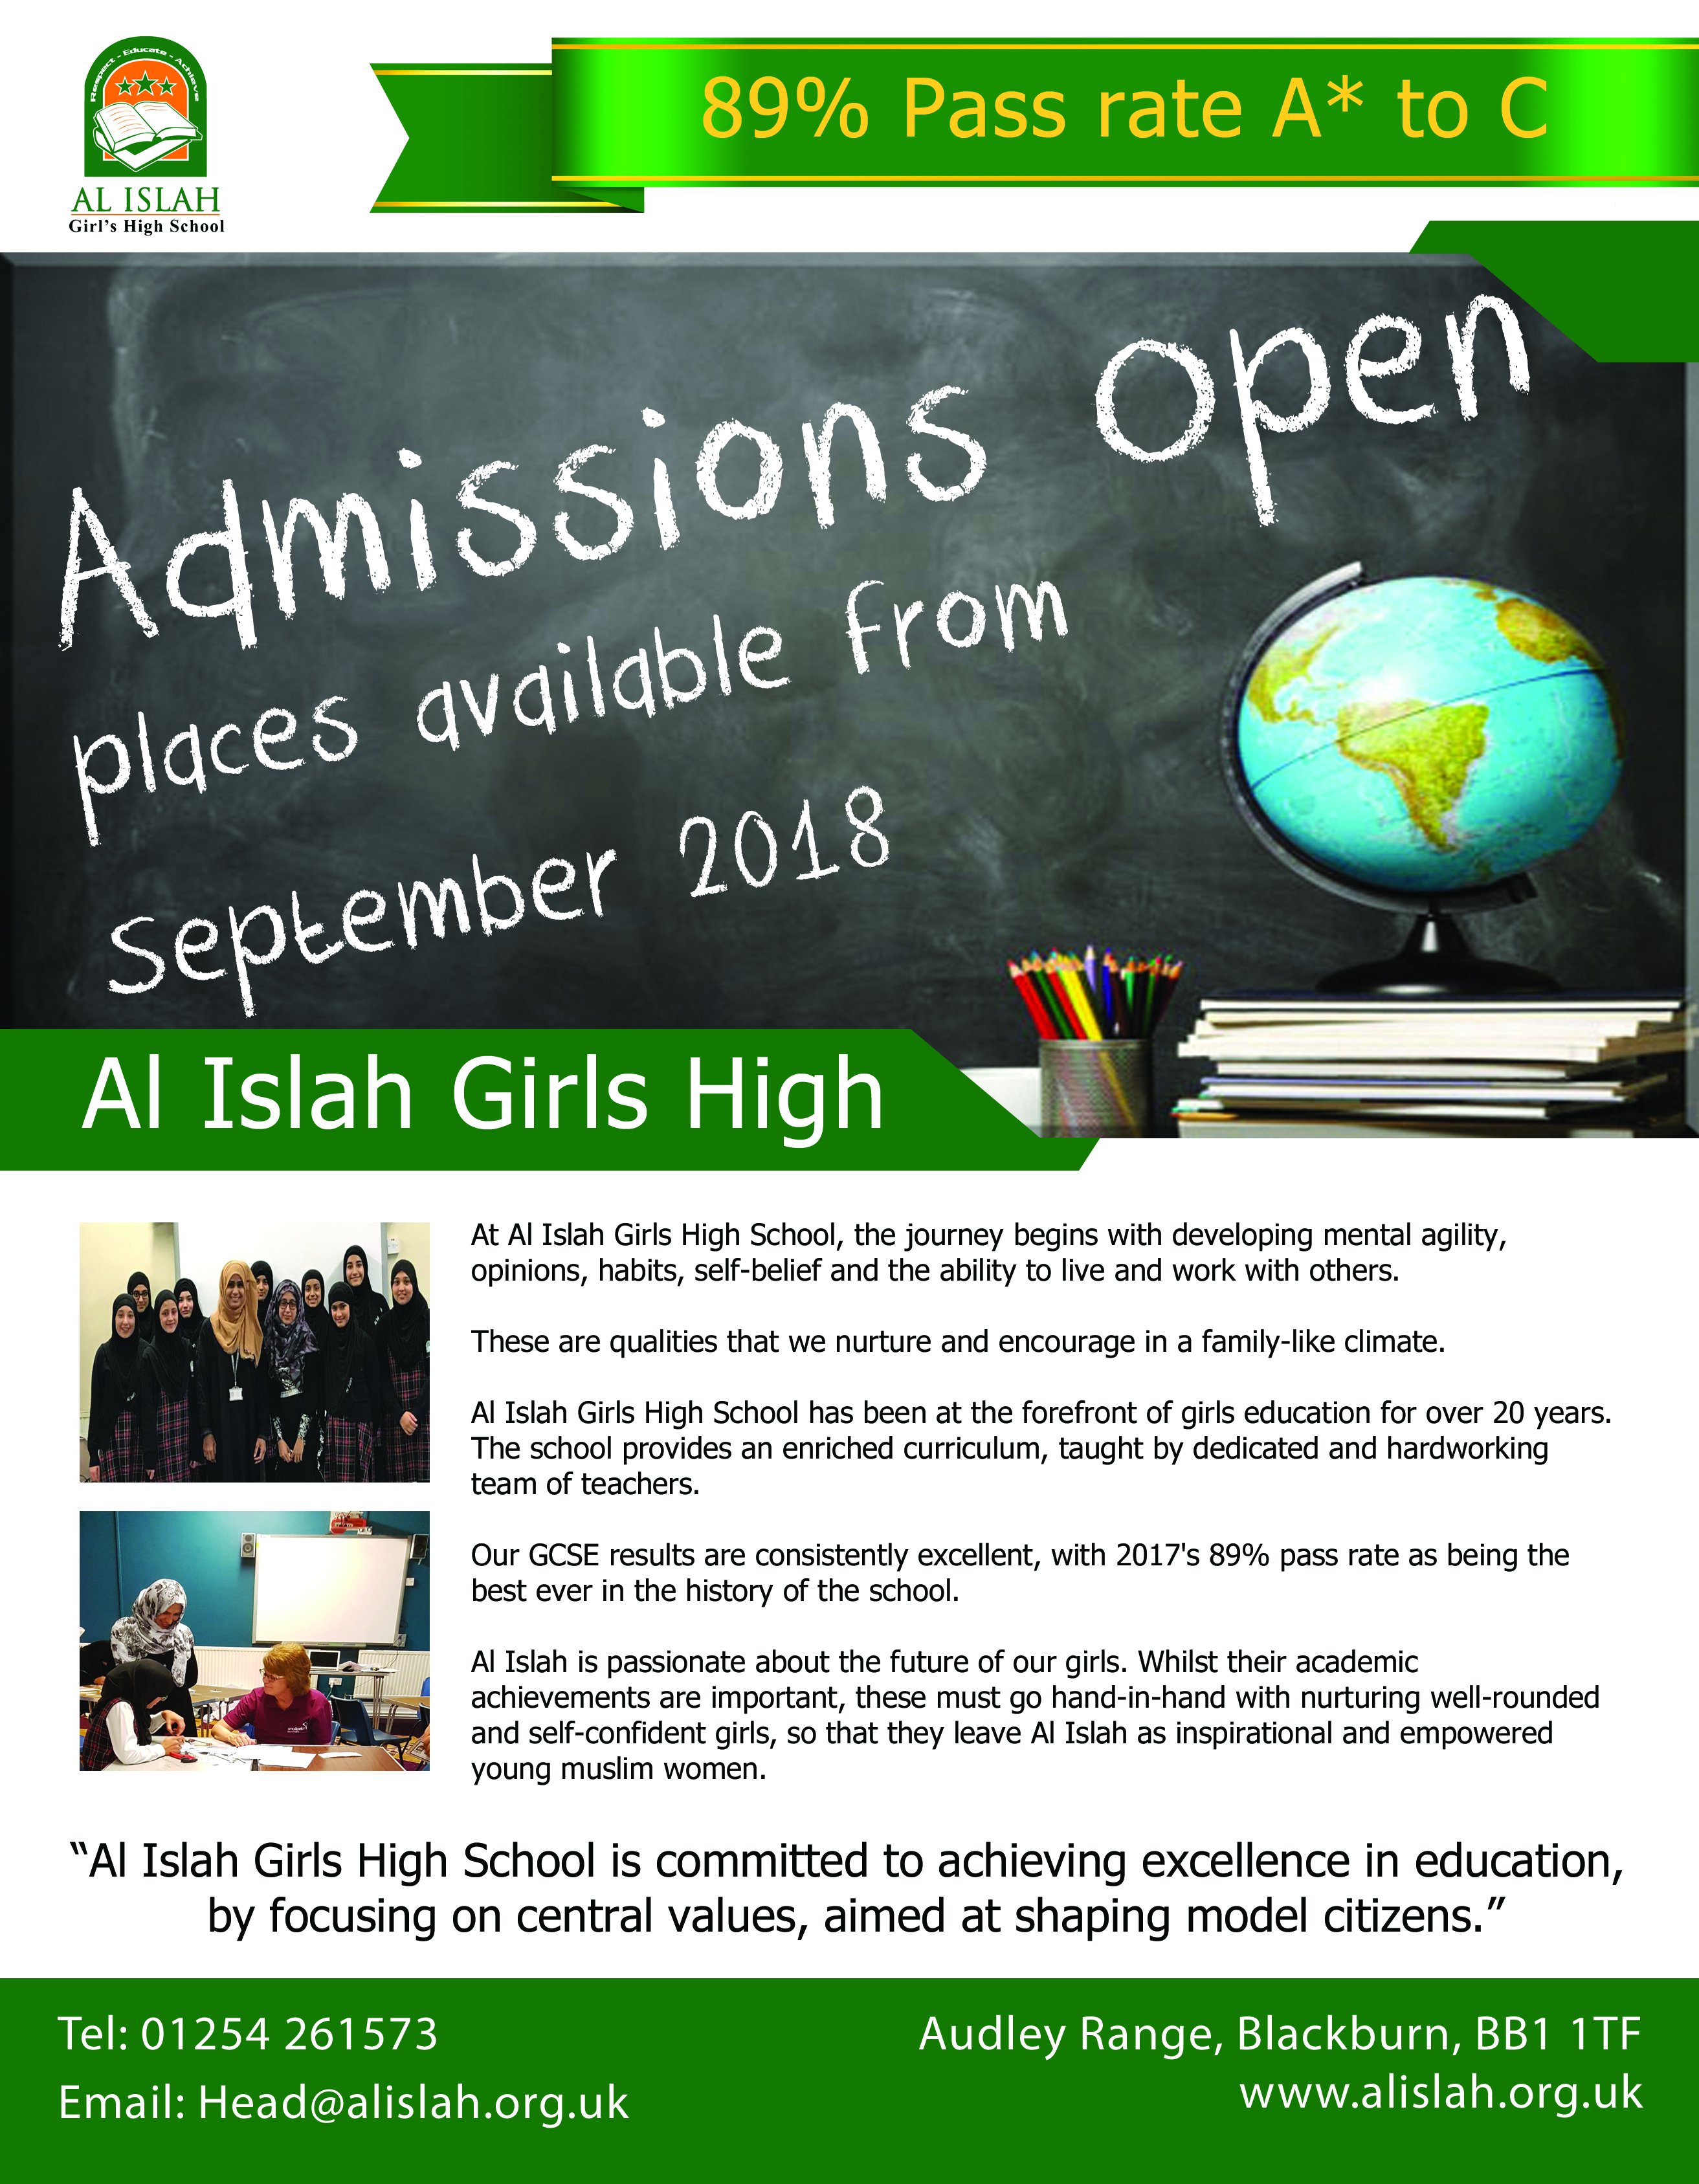 Al Islah Recruitment for 2018/19